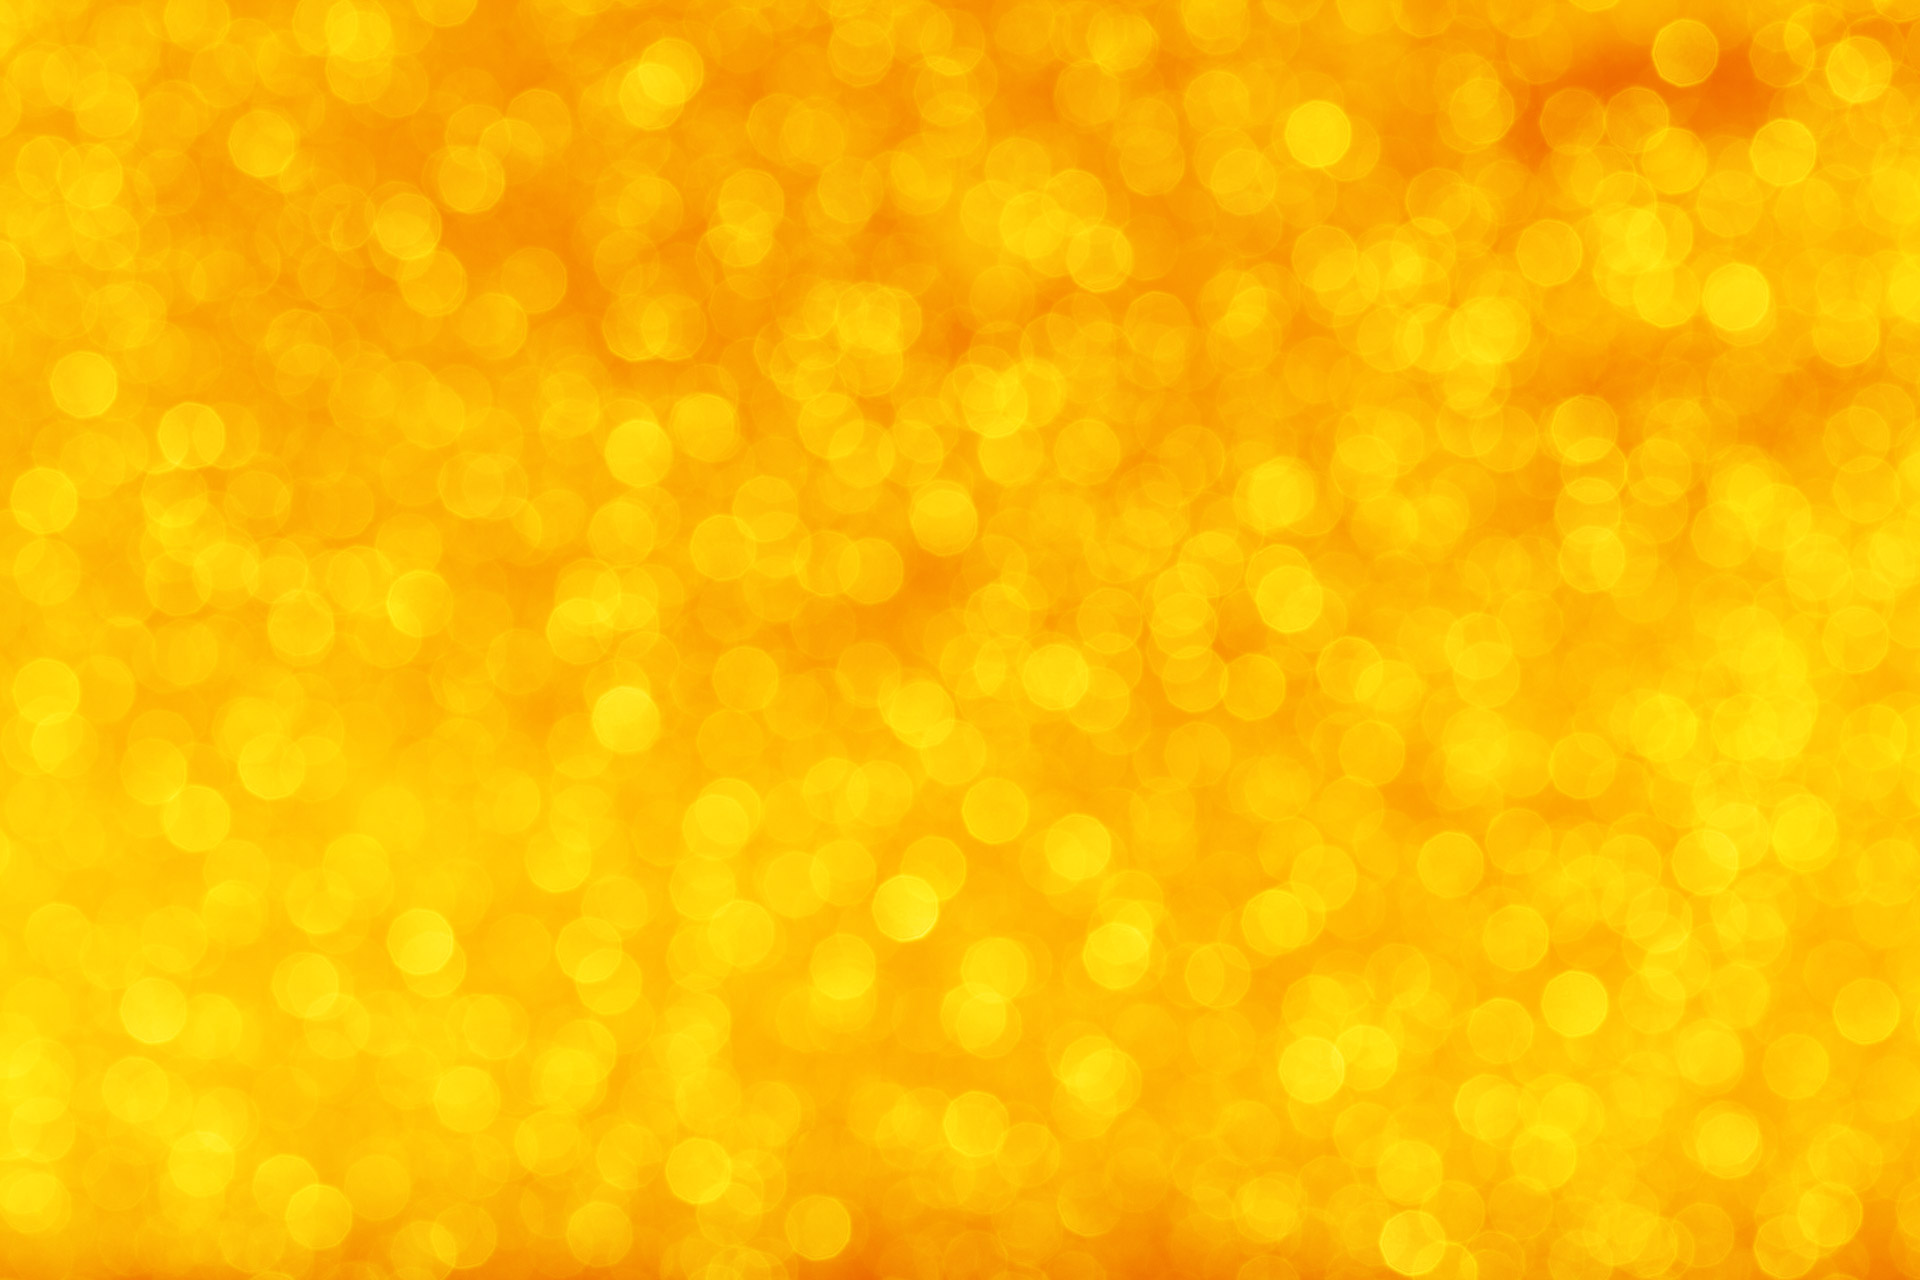 blurry golden yellow background